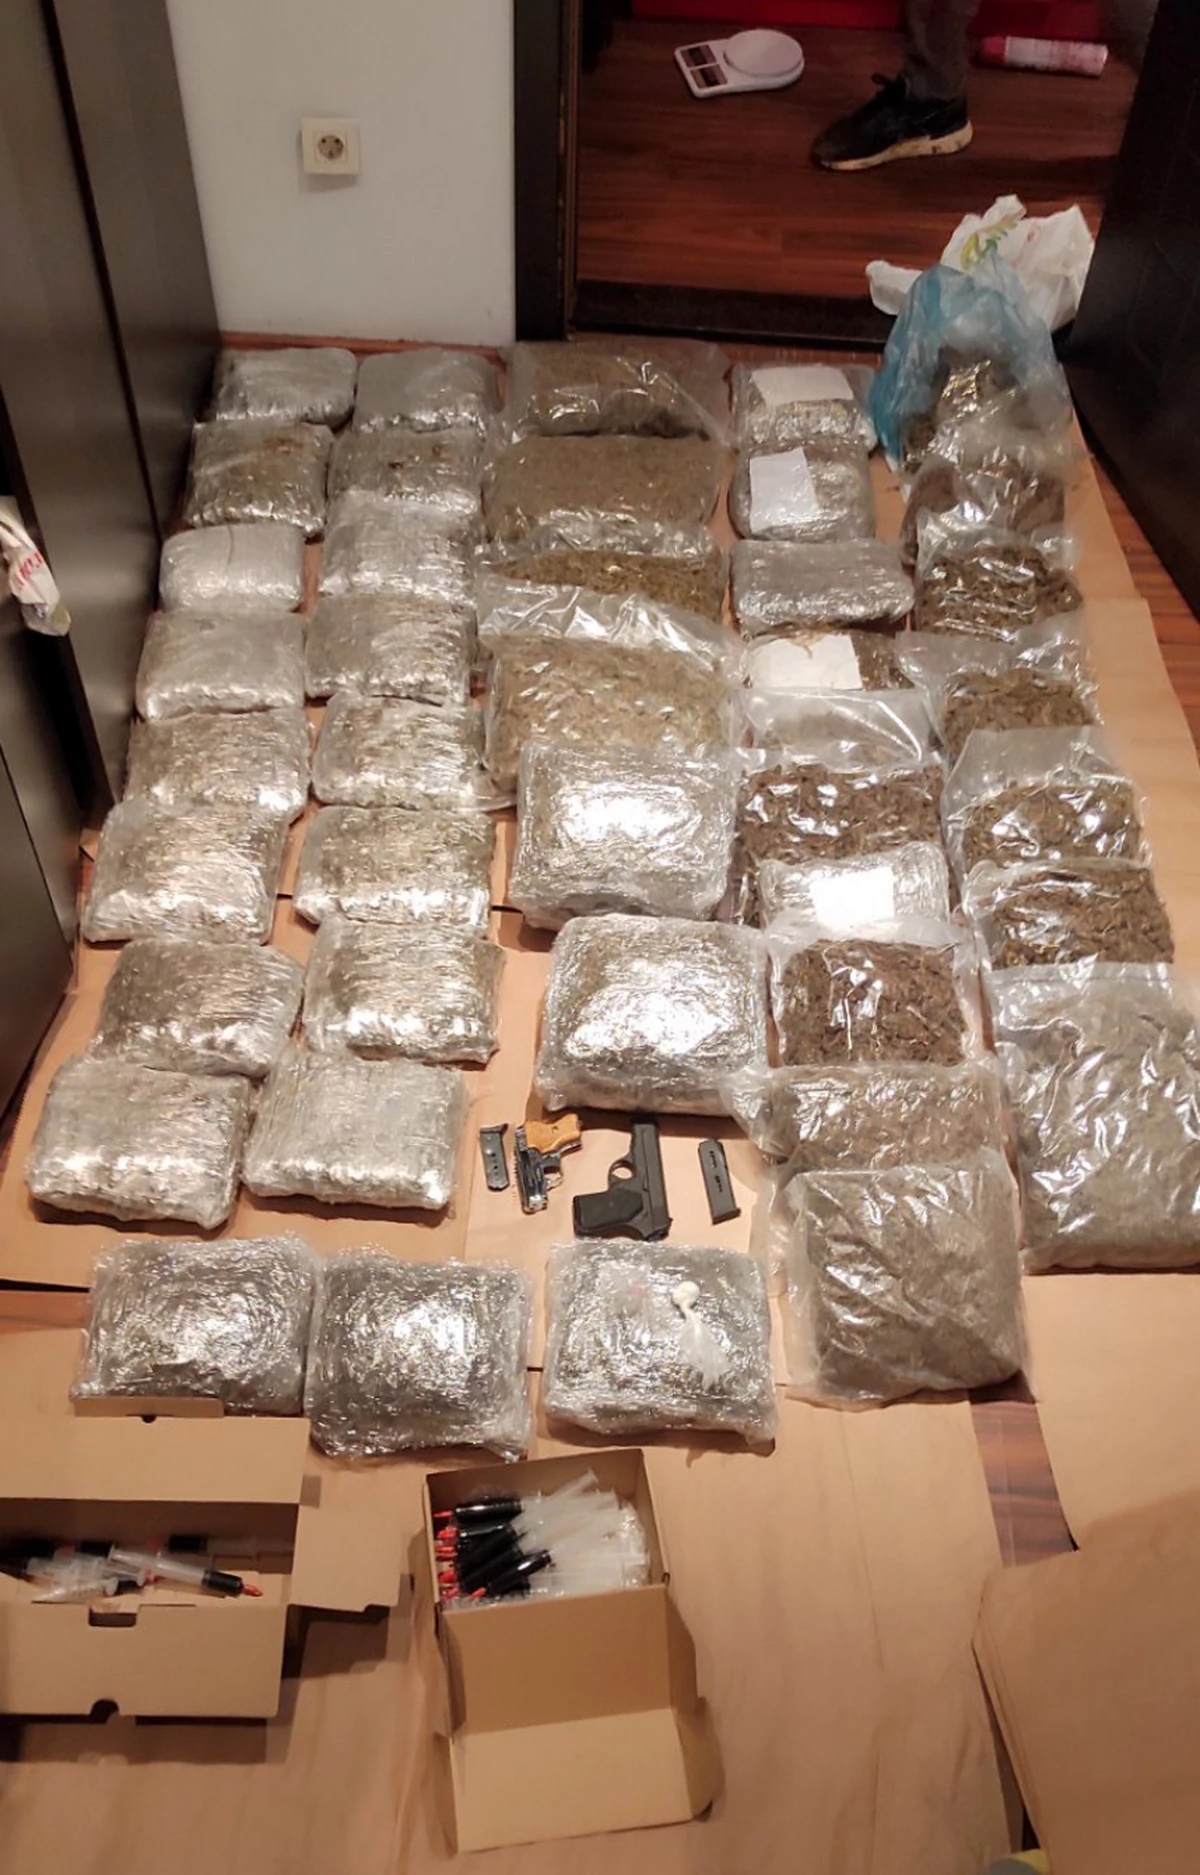 VELIKA AKCIJA POLICIJE NA NOVOM BEOGRADU Zaplenjeno 20 kilograma droge, oružje i novac